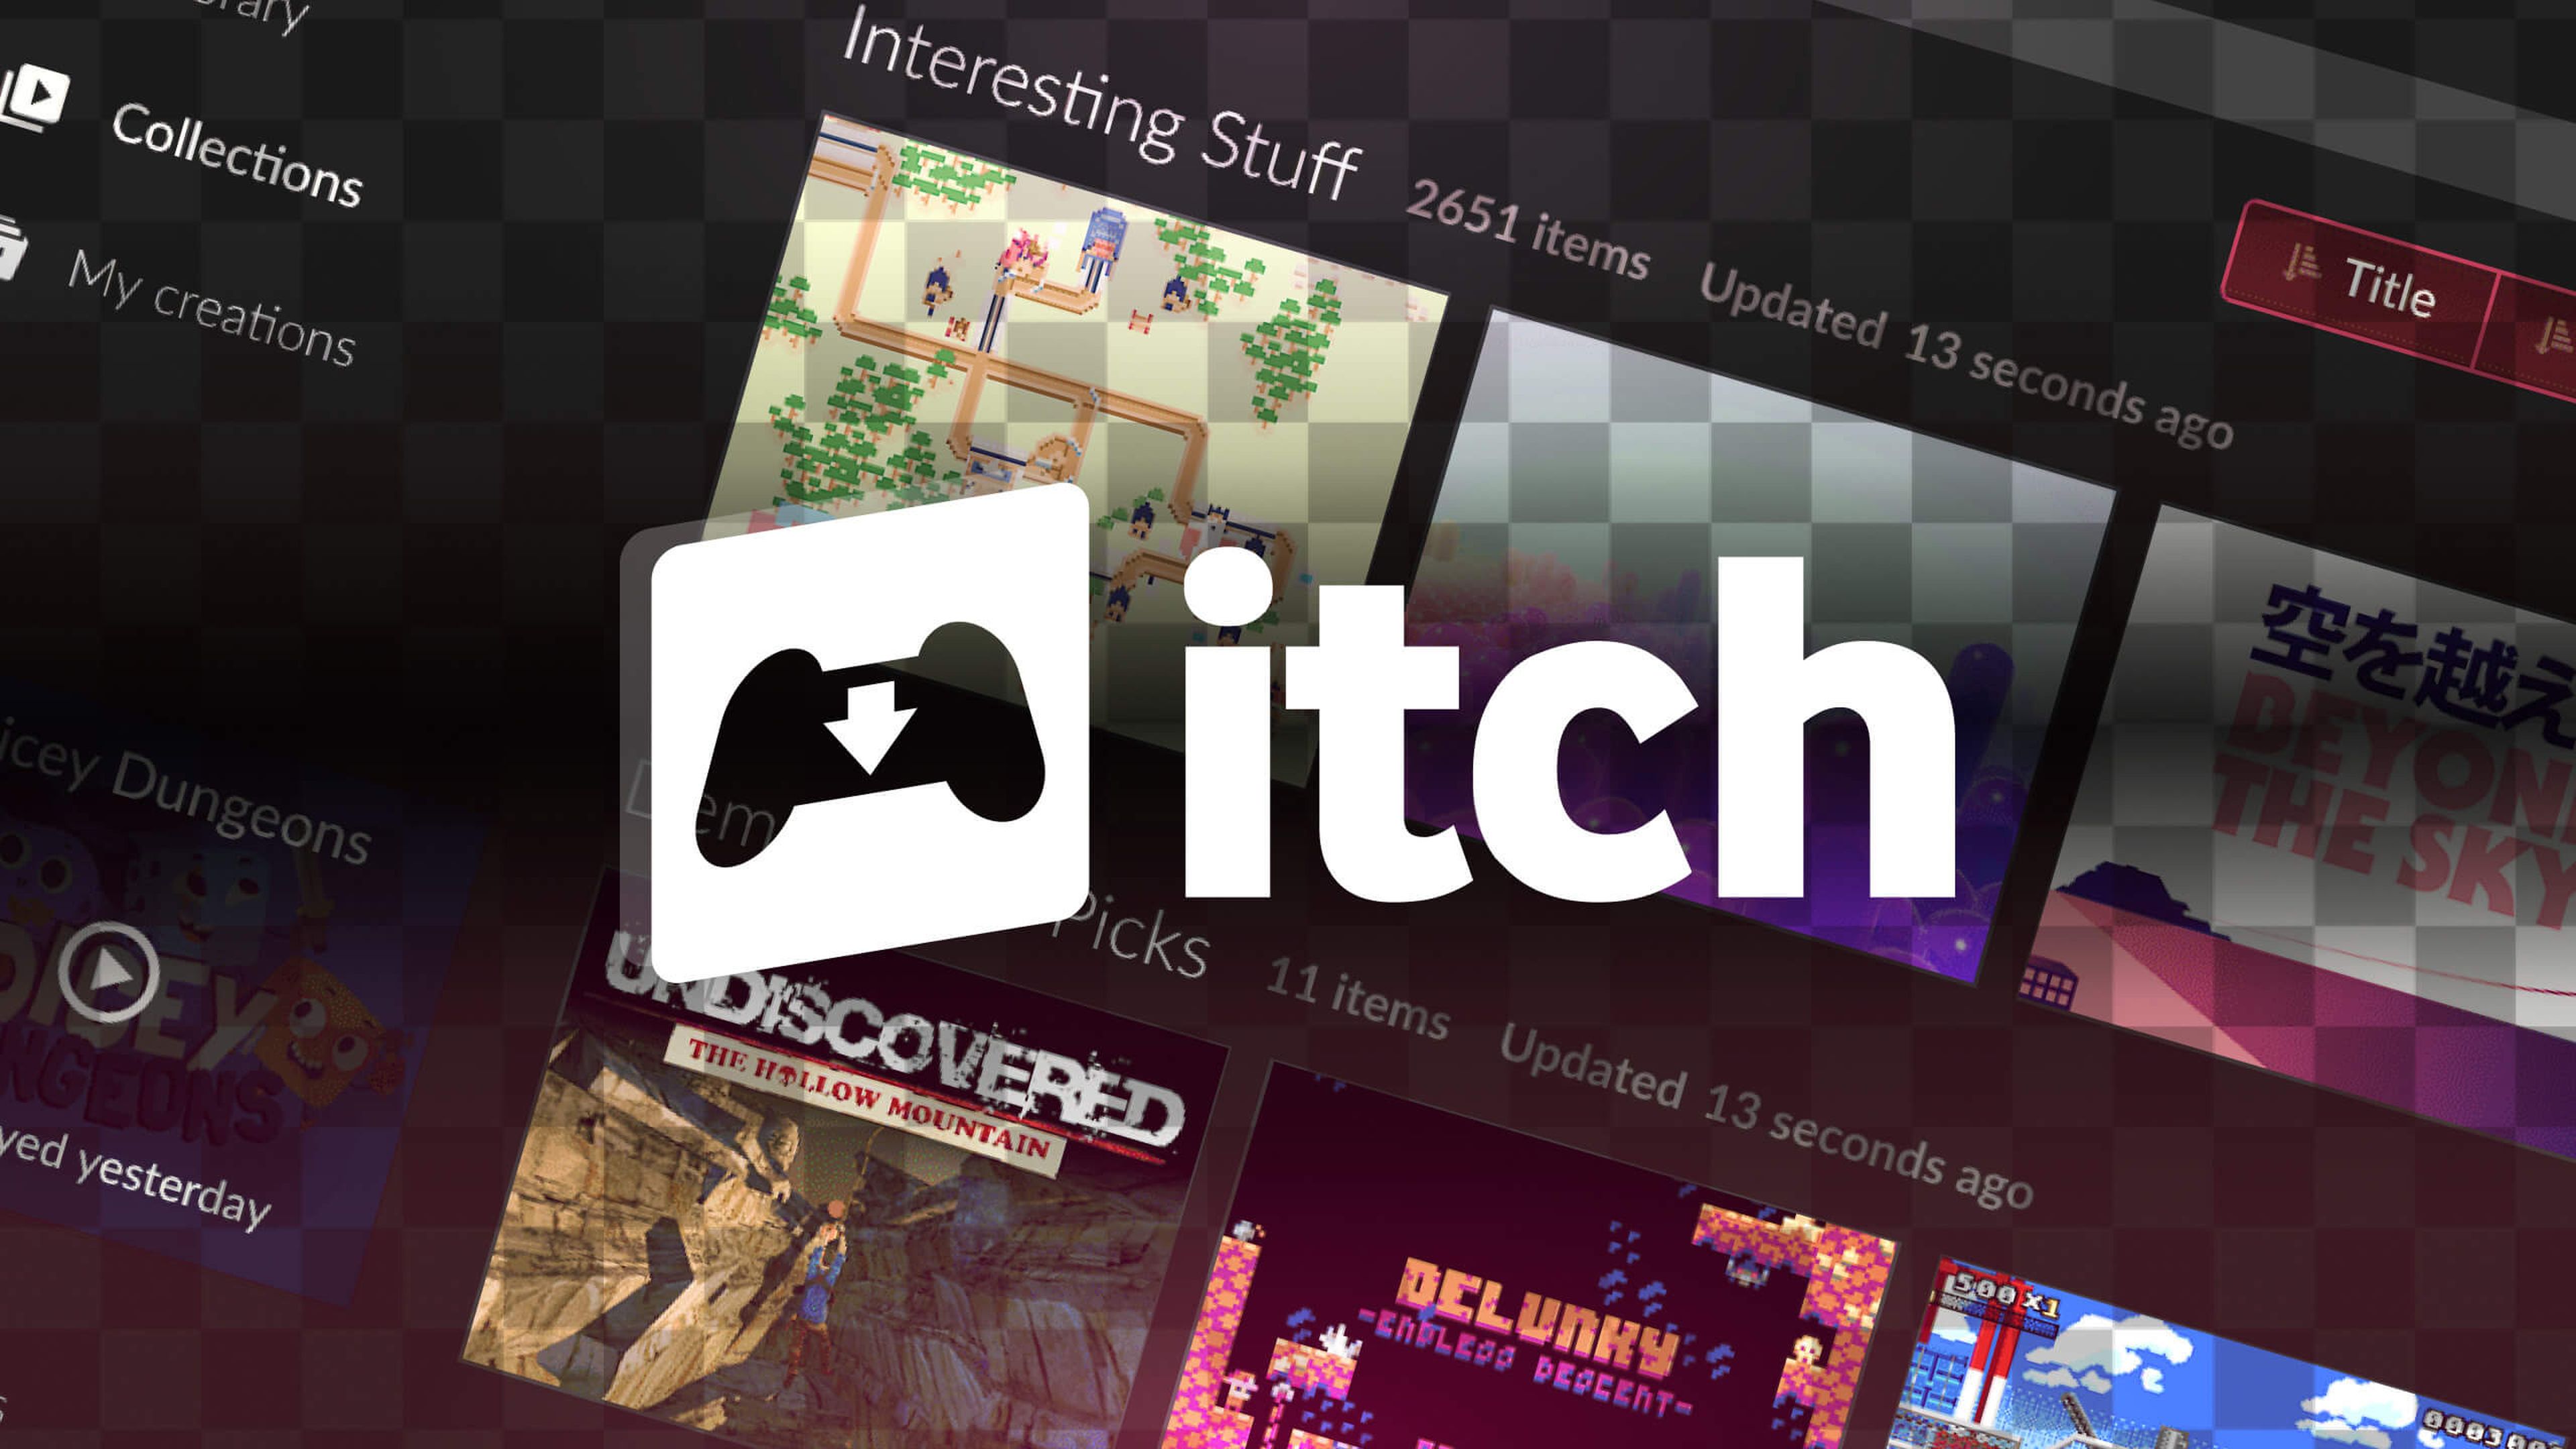 Epic Store Itch.io